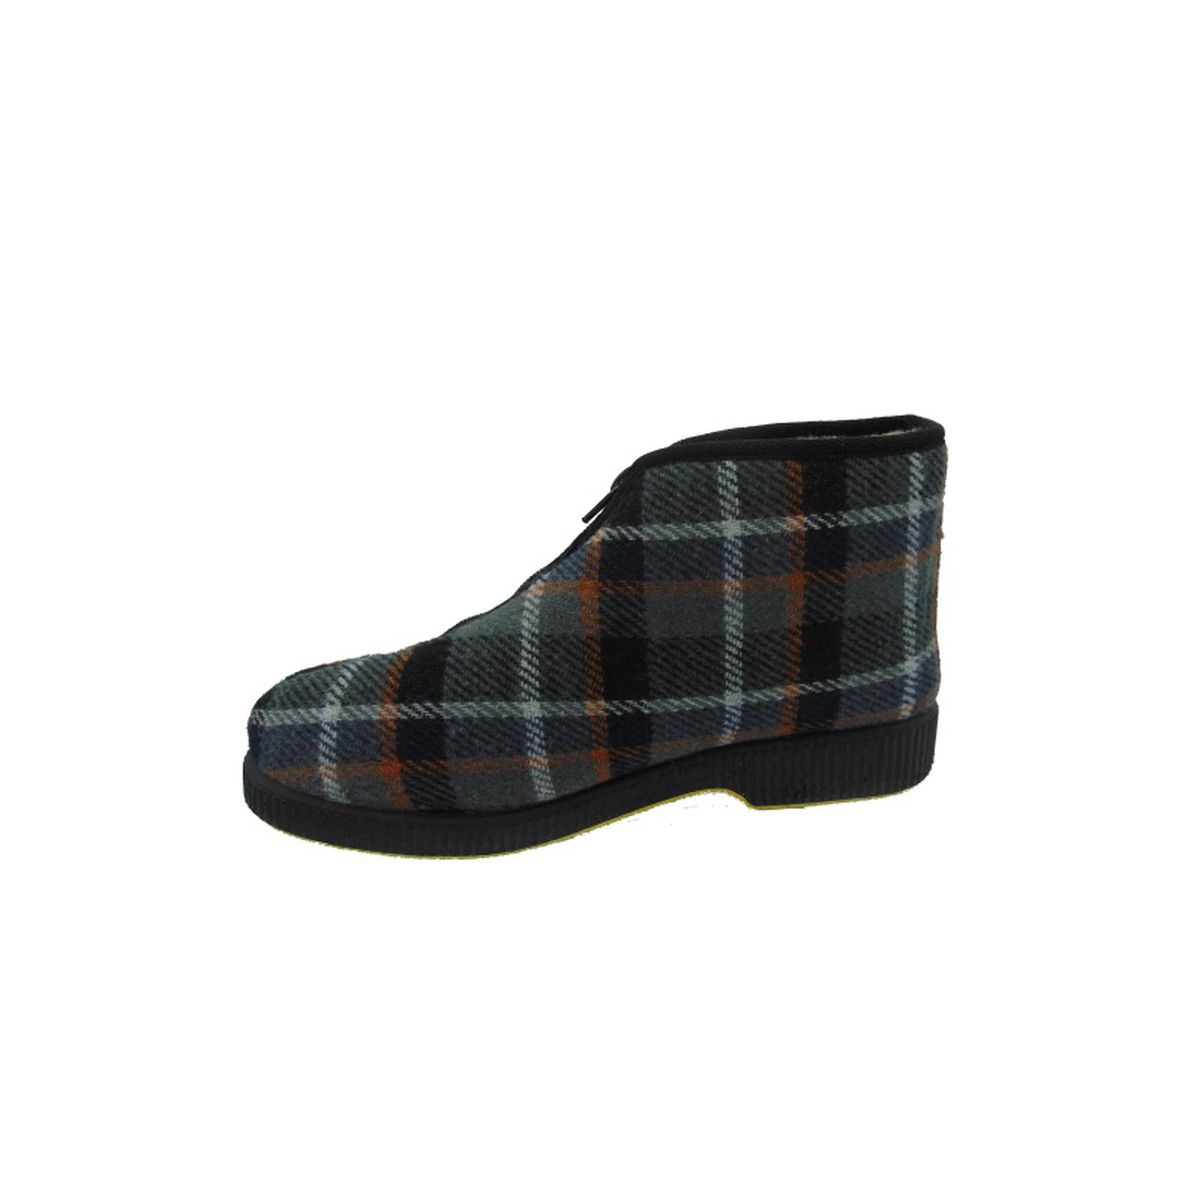 Pantofola Uomo con zip, Interno Lana, Emanuela 565 Grigio scozzese